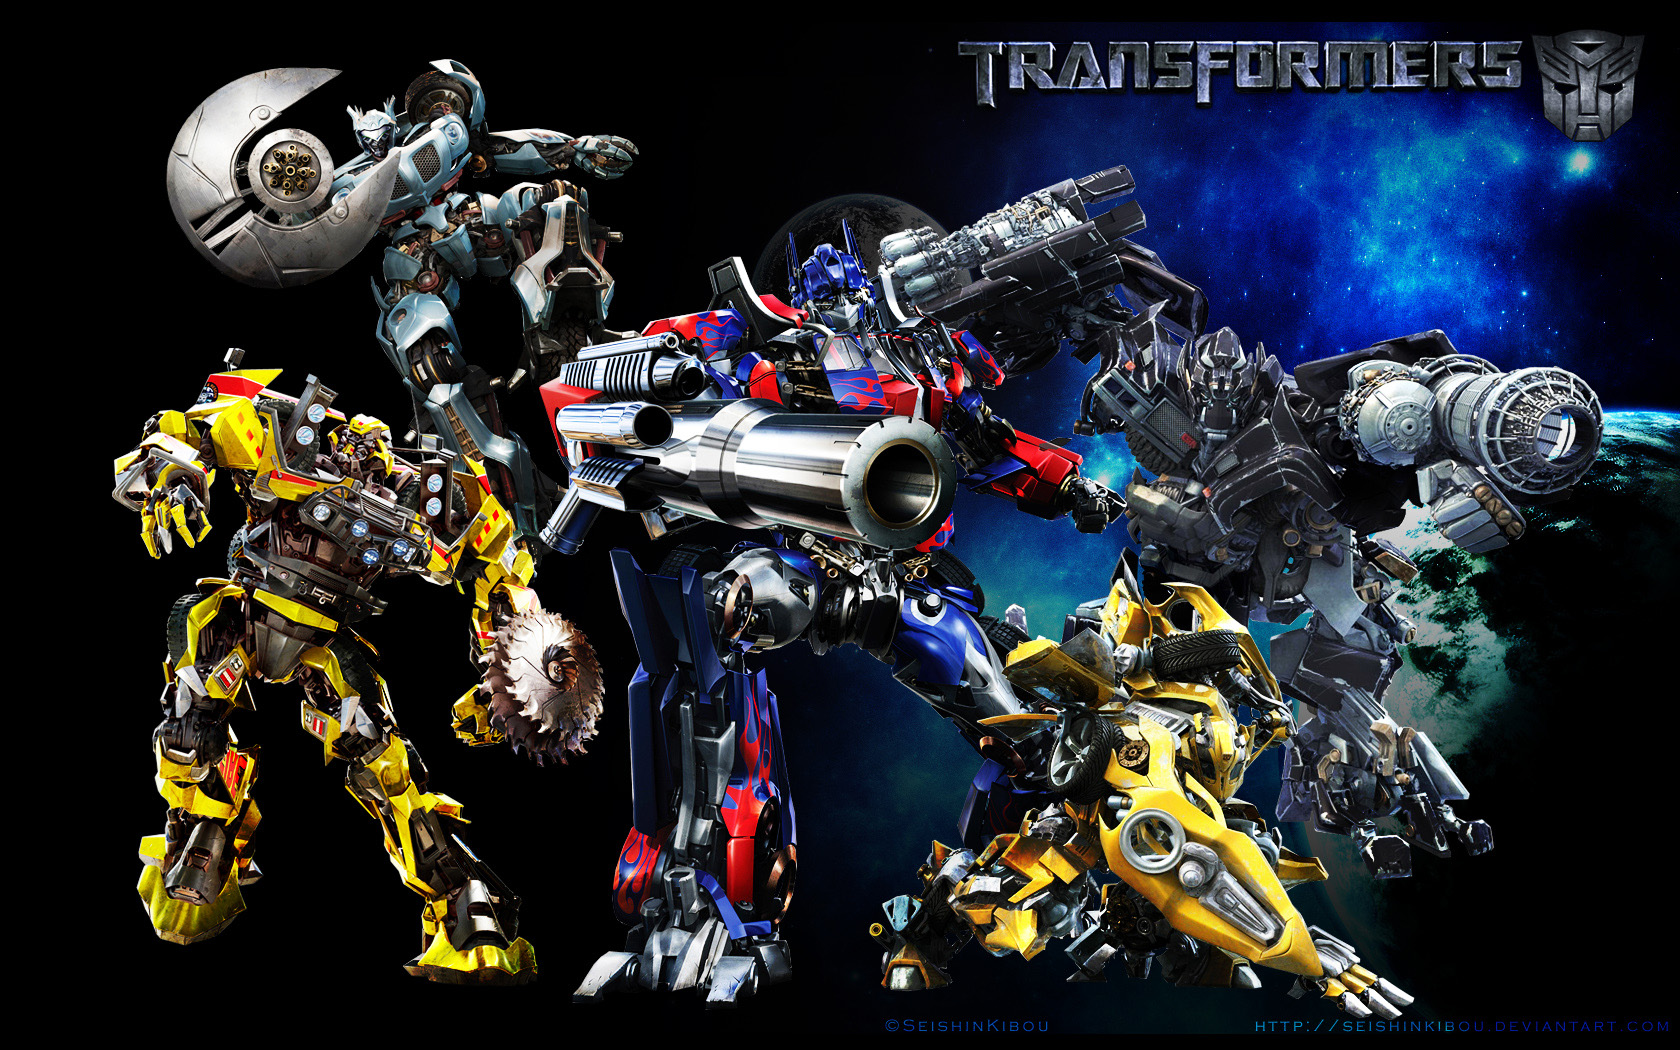  Movie Autobots Group 1680 x 1050jpg   Transformers Movie Wallpapers 1680x1050